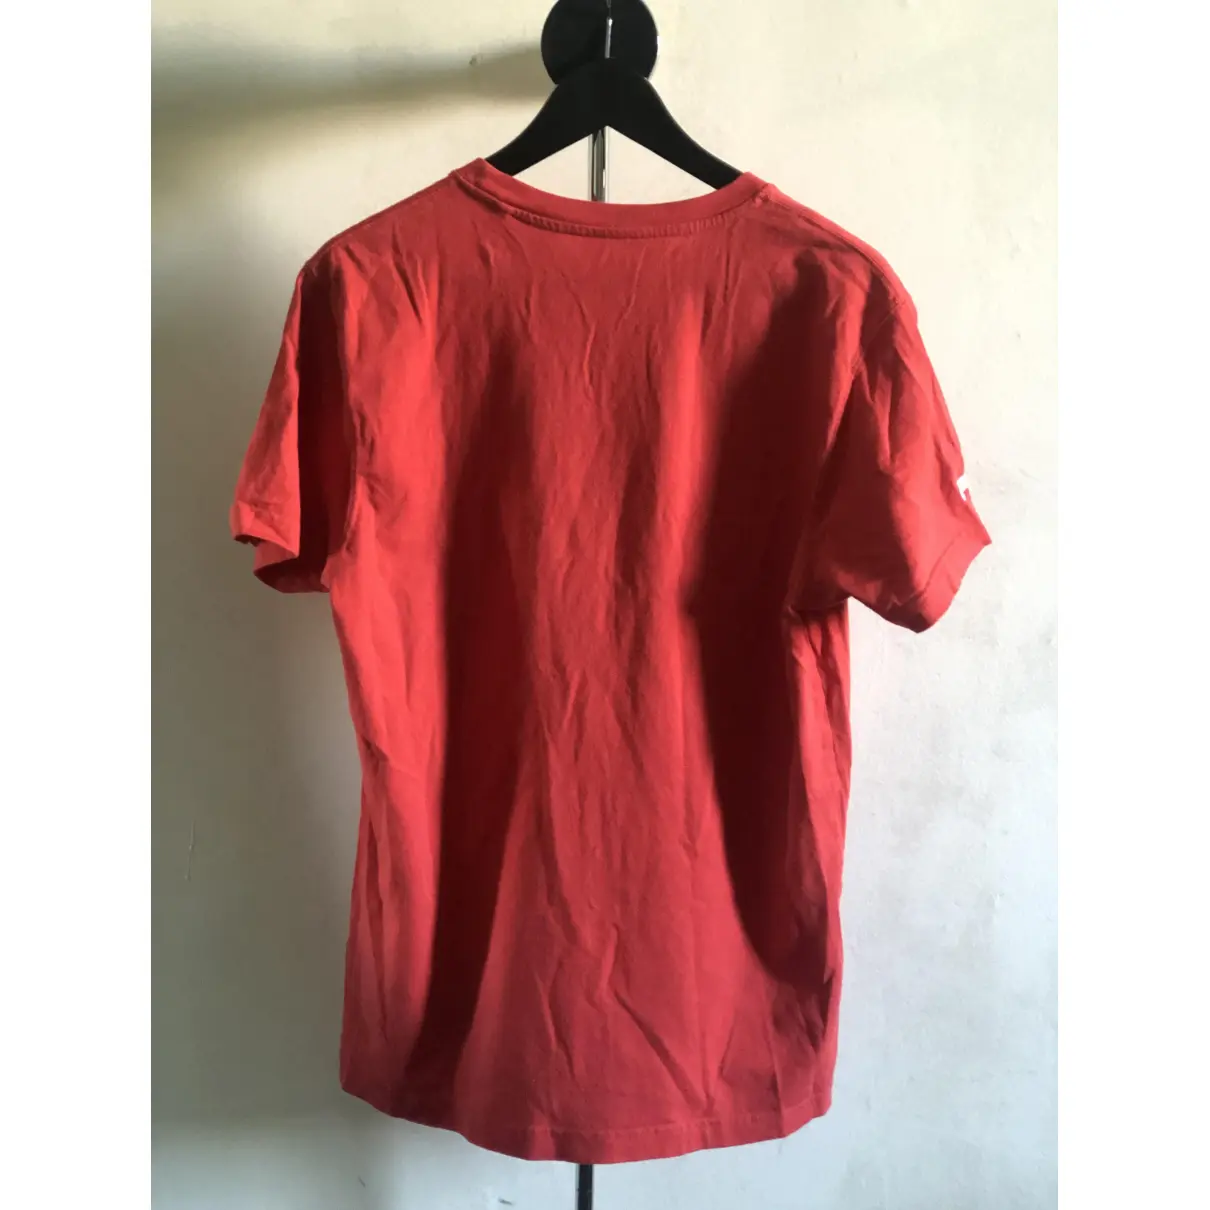 Buy Heron Preston Red Cotton T-shirt online